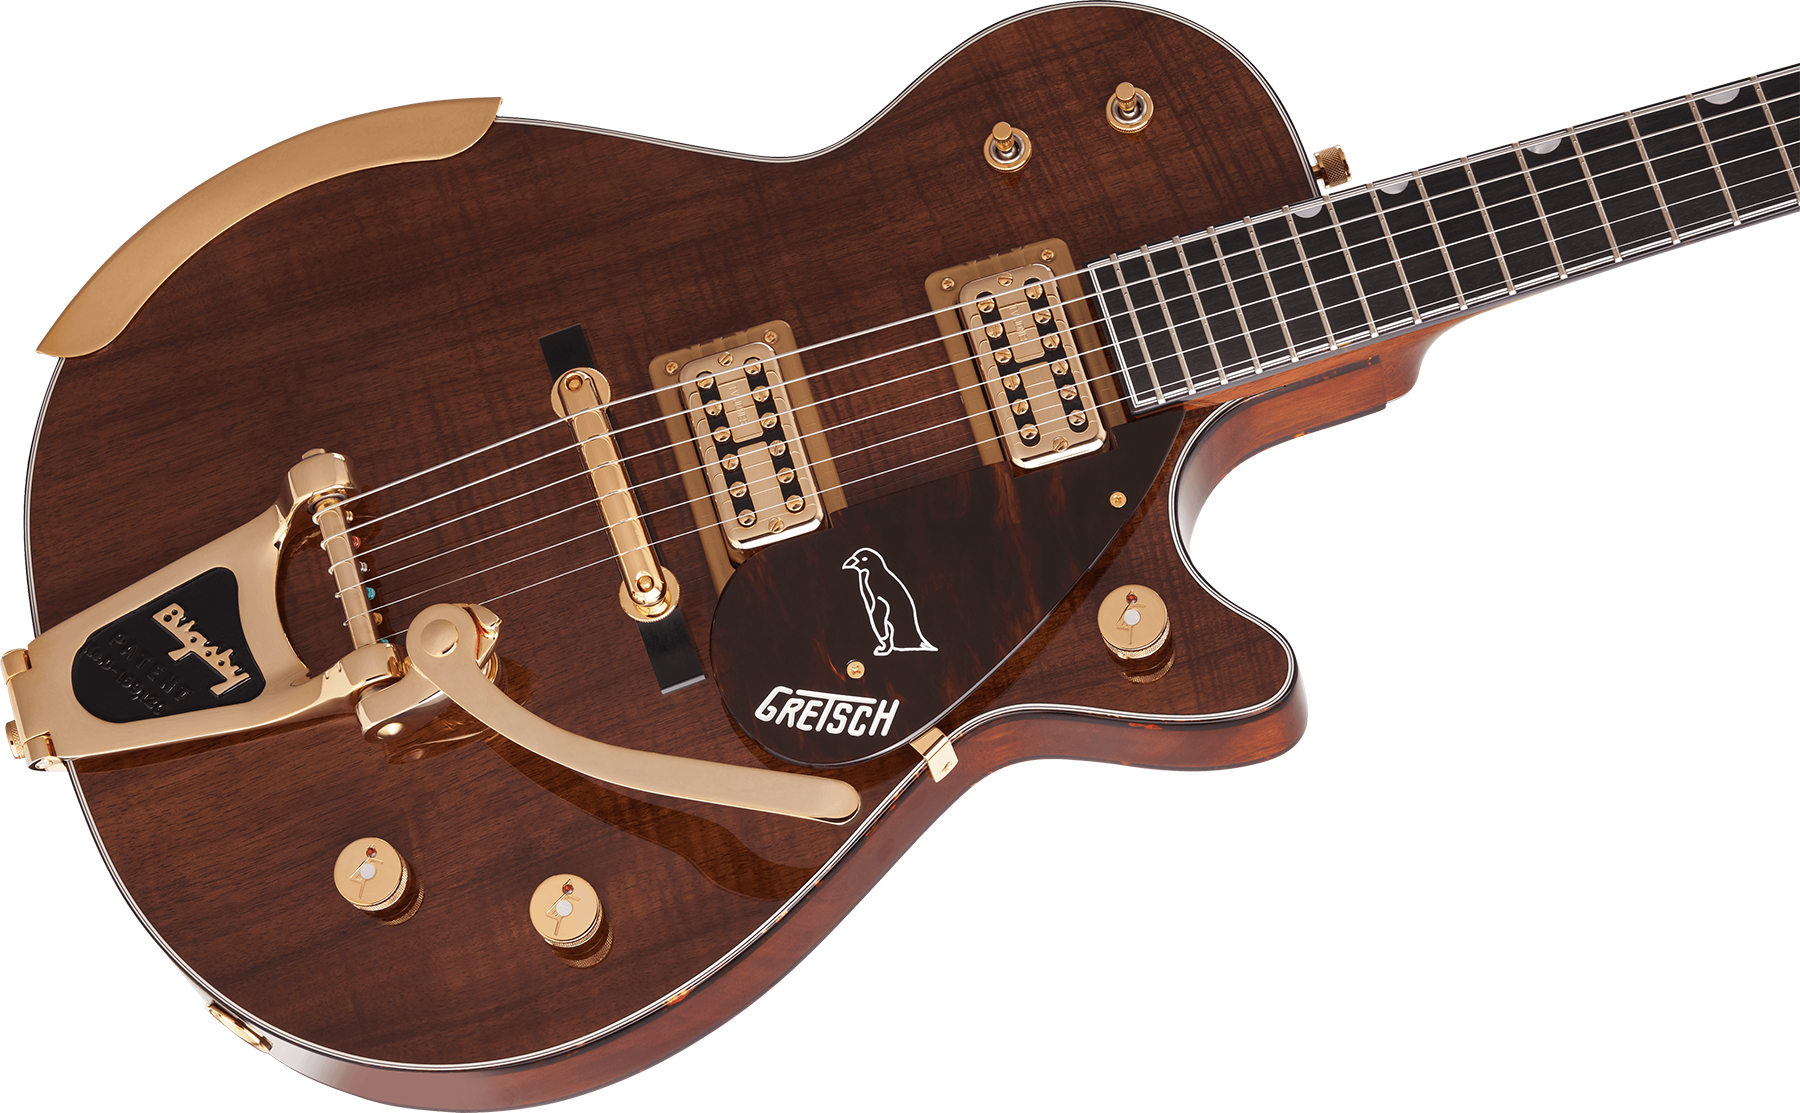 Gretsch G6134t-ltd Penguin Koa Bigsby Pro Jap 2h Trem Eb - Natural - Guitarra eléctrica de corte único. - Variation 2